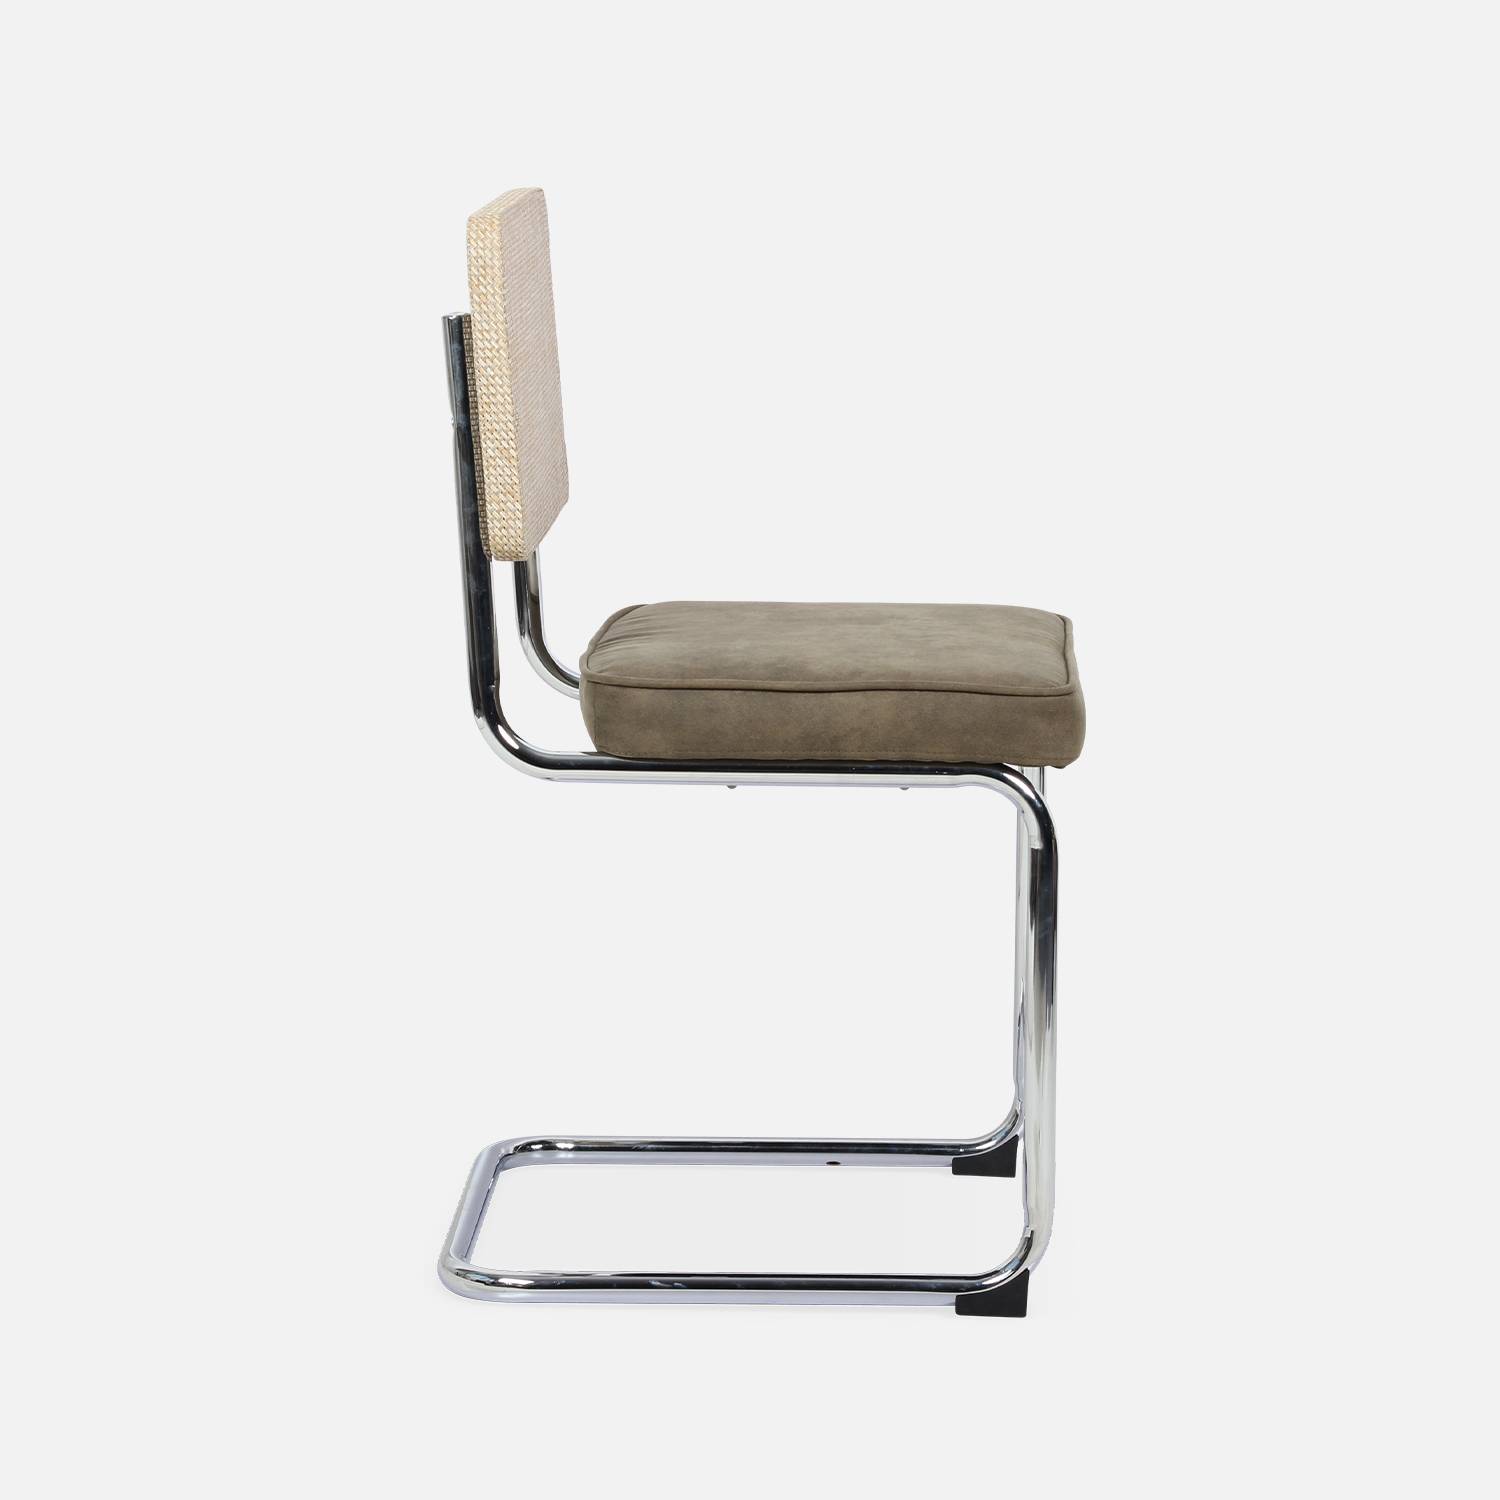 2 chaises cantilever - Maja - tissu kaki et résine effet rotin, 46 x 54,5 x 84,5cm   Photo6